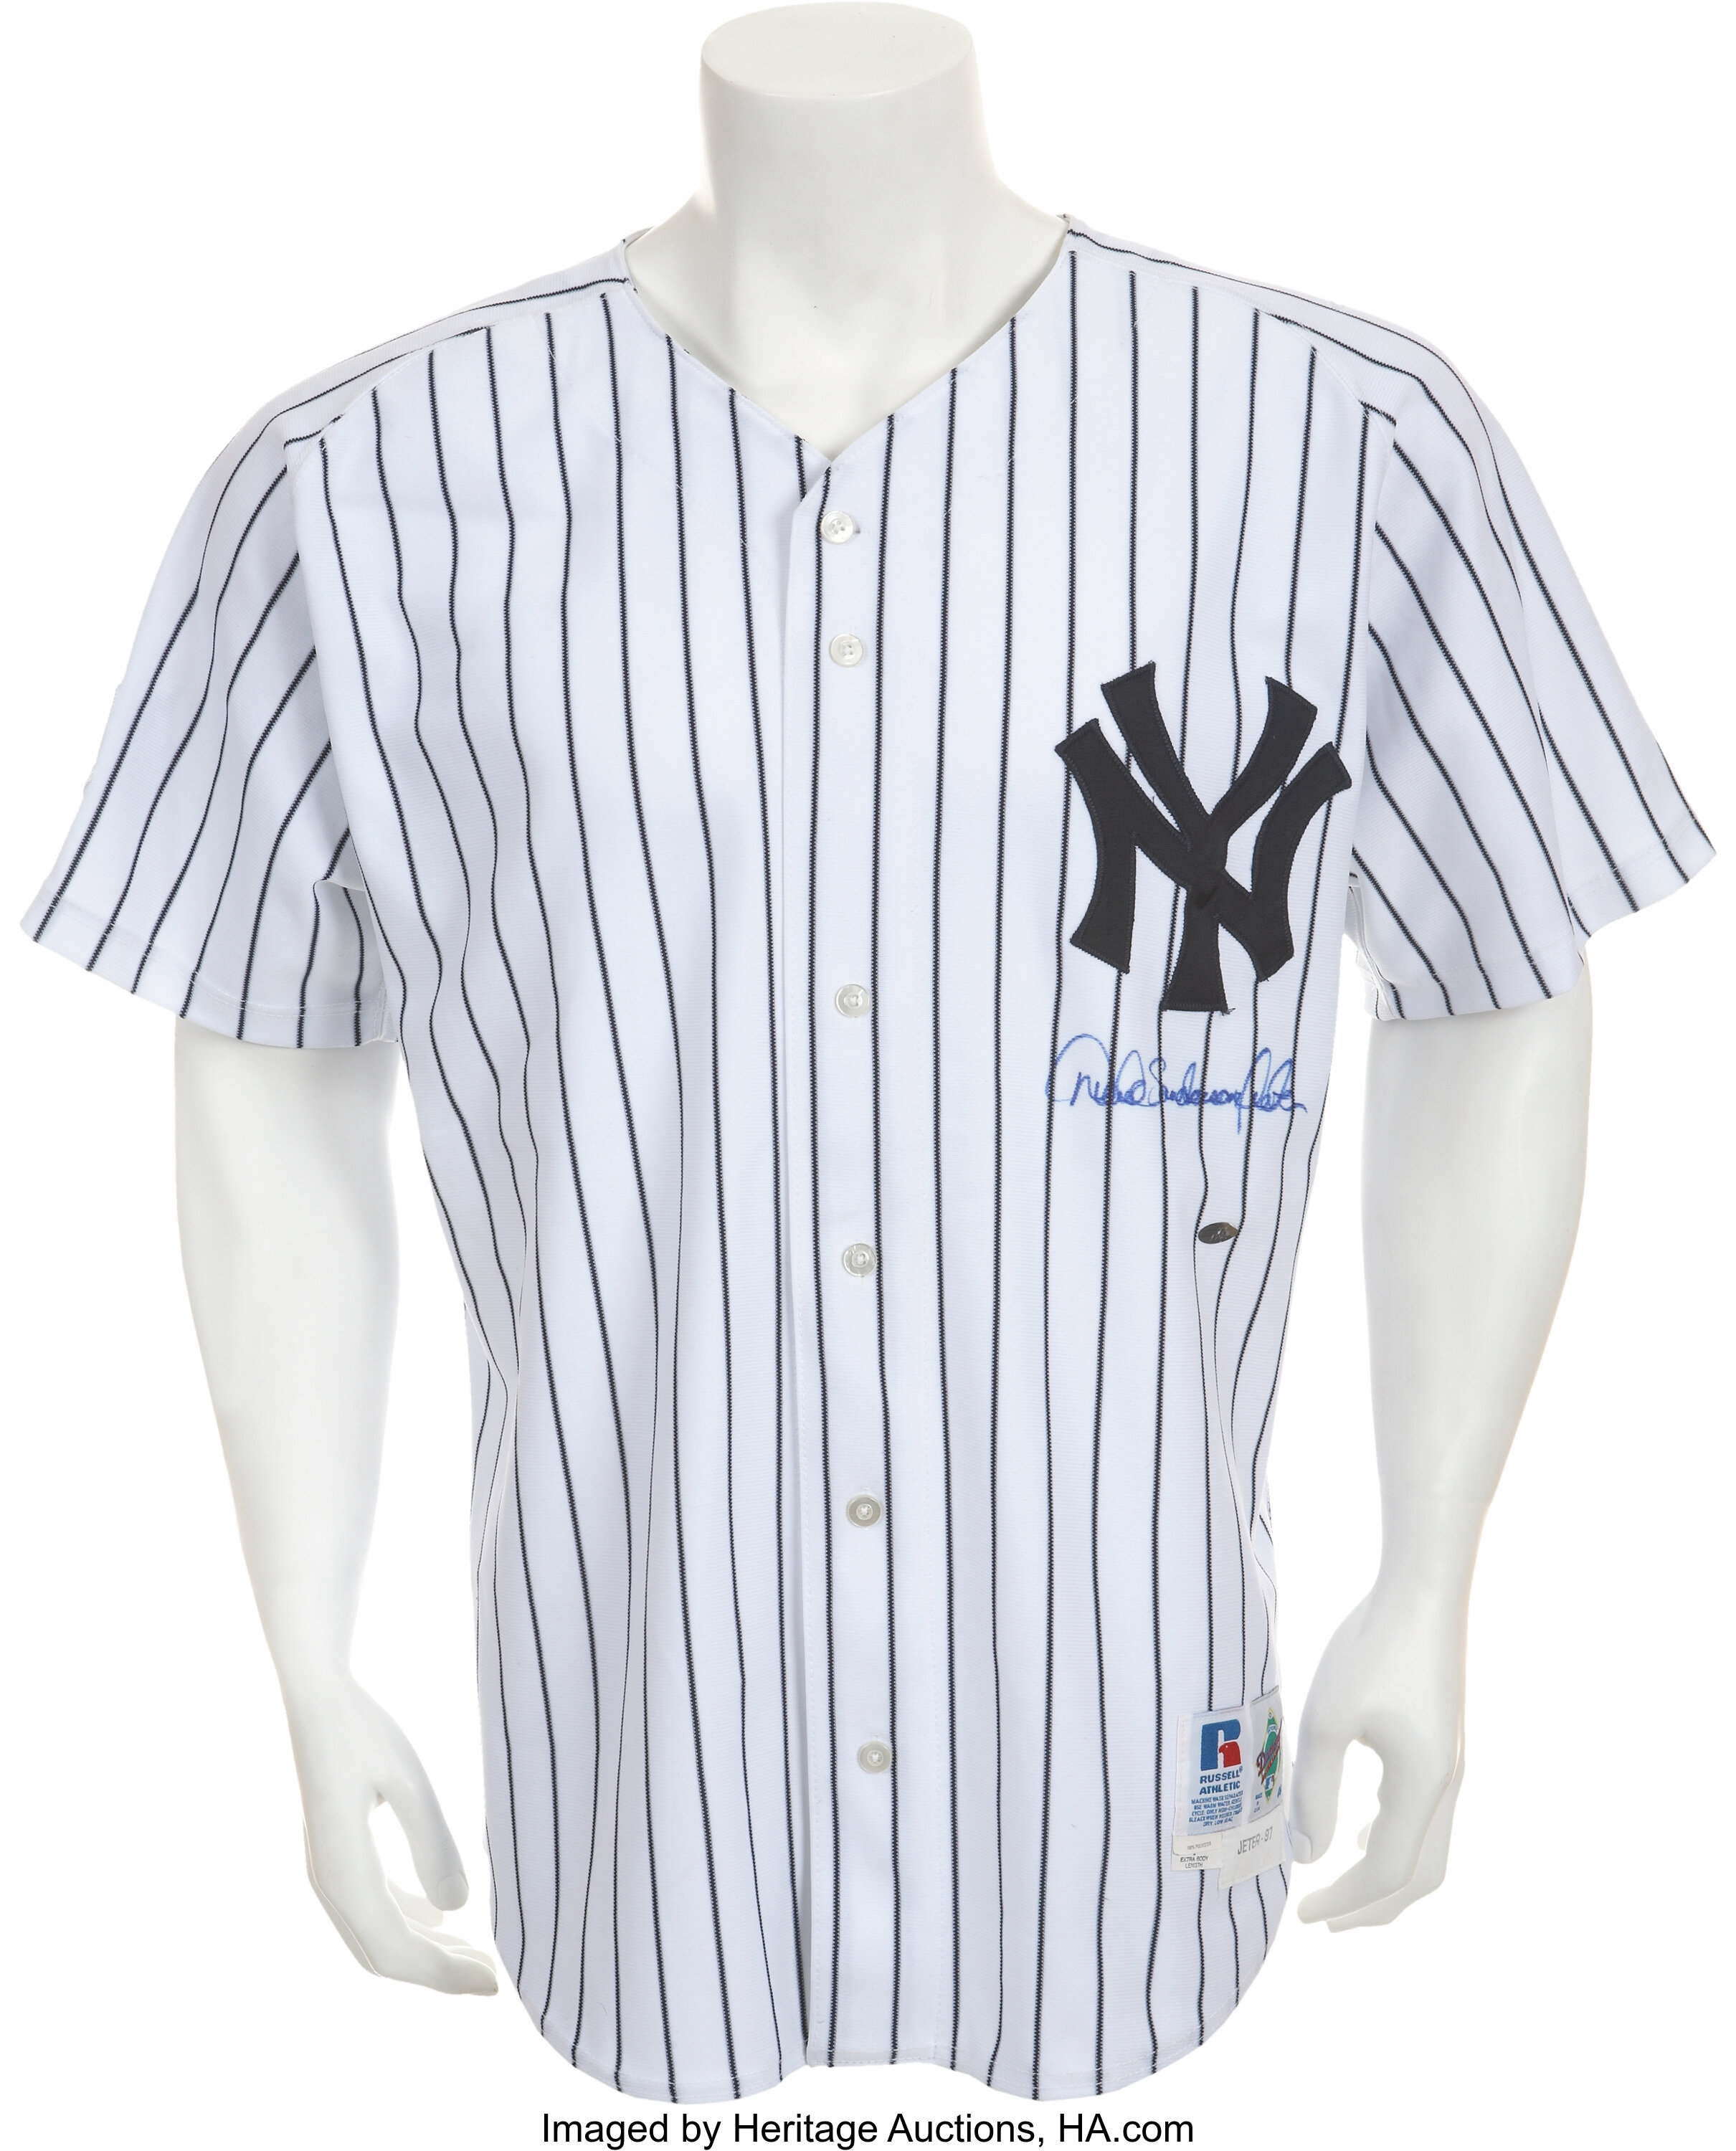  Derek Jeter New York Yankees White 1997 Cooperstown